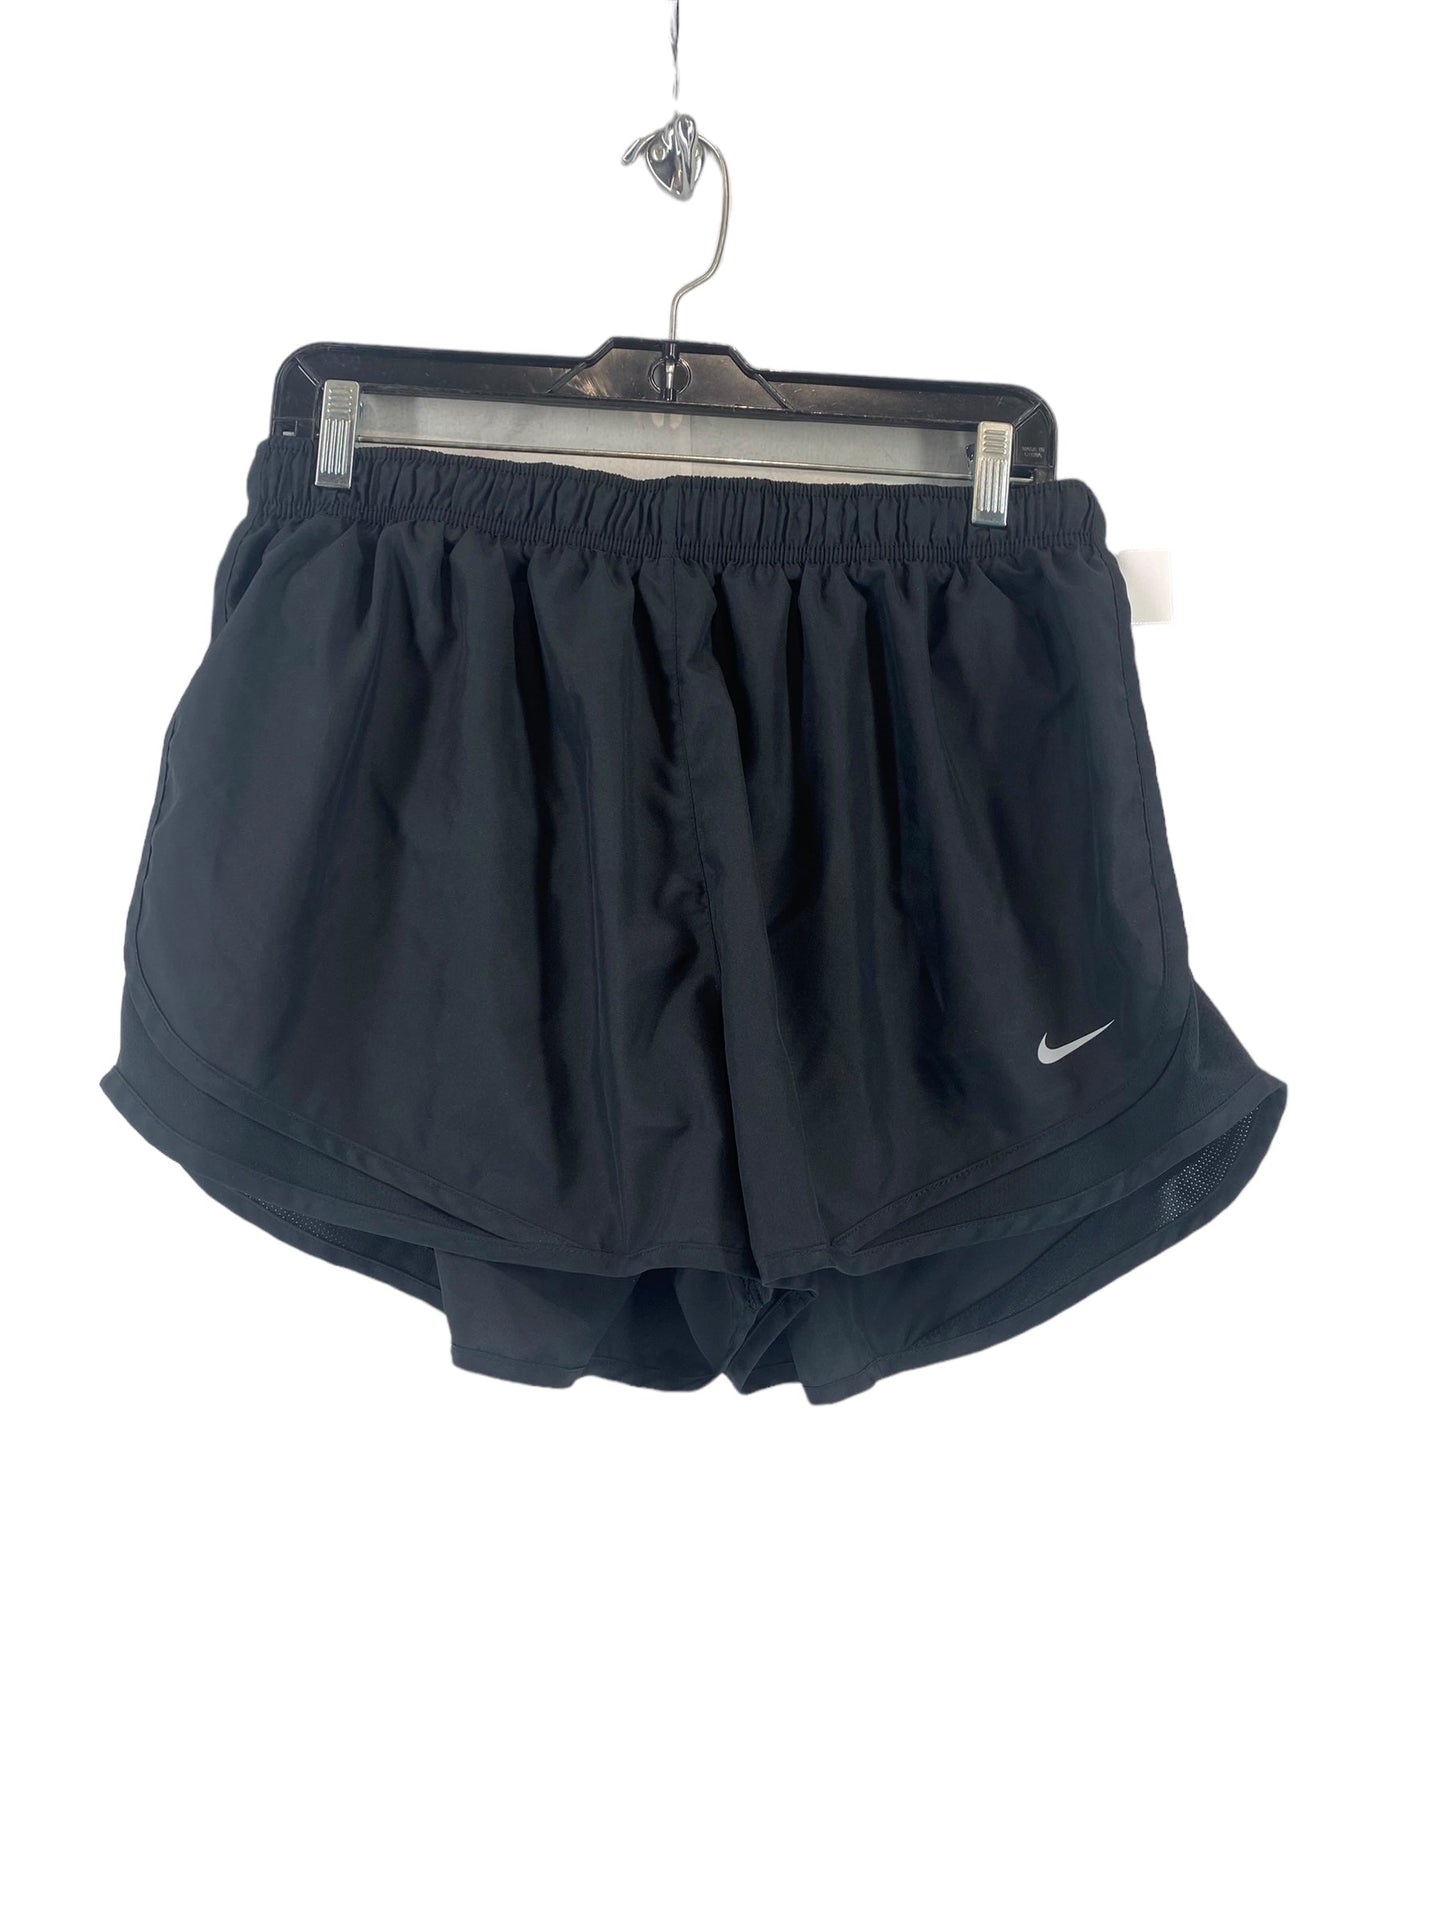 Black Athletic Shorts Nike Apparel, Size 2x